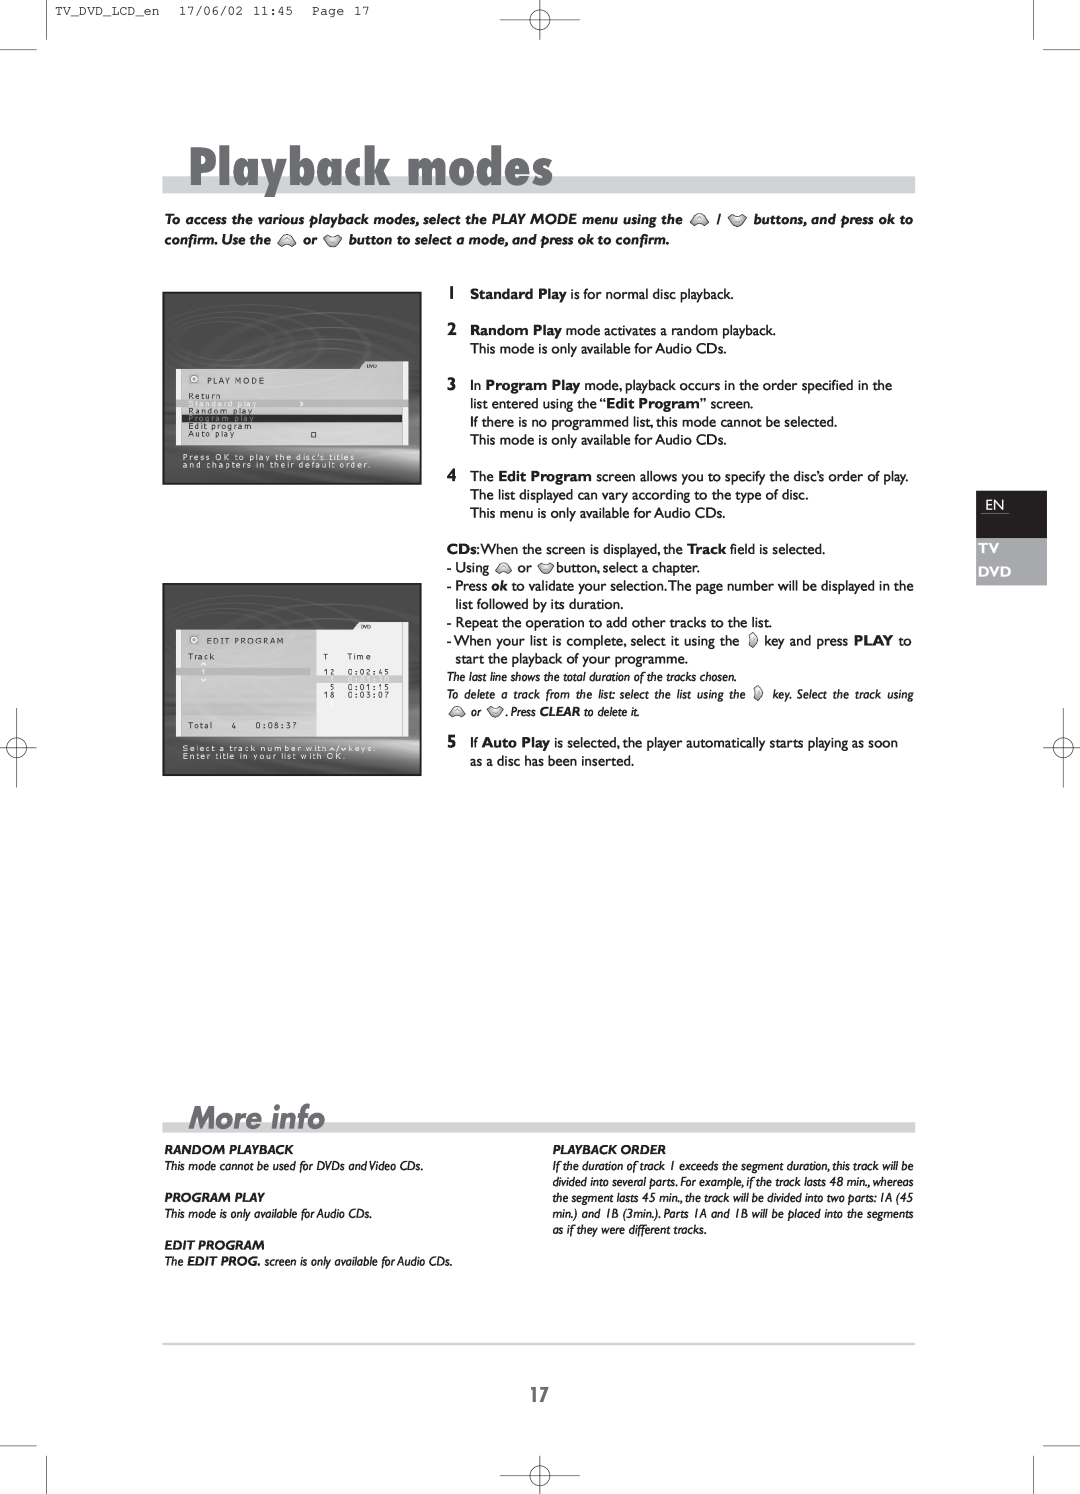 Technicolor - Thomson TV/DVD Combo manual Playback modes, More info, Tv Dvd 